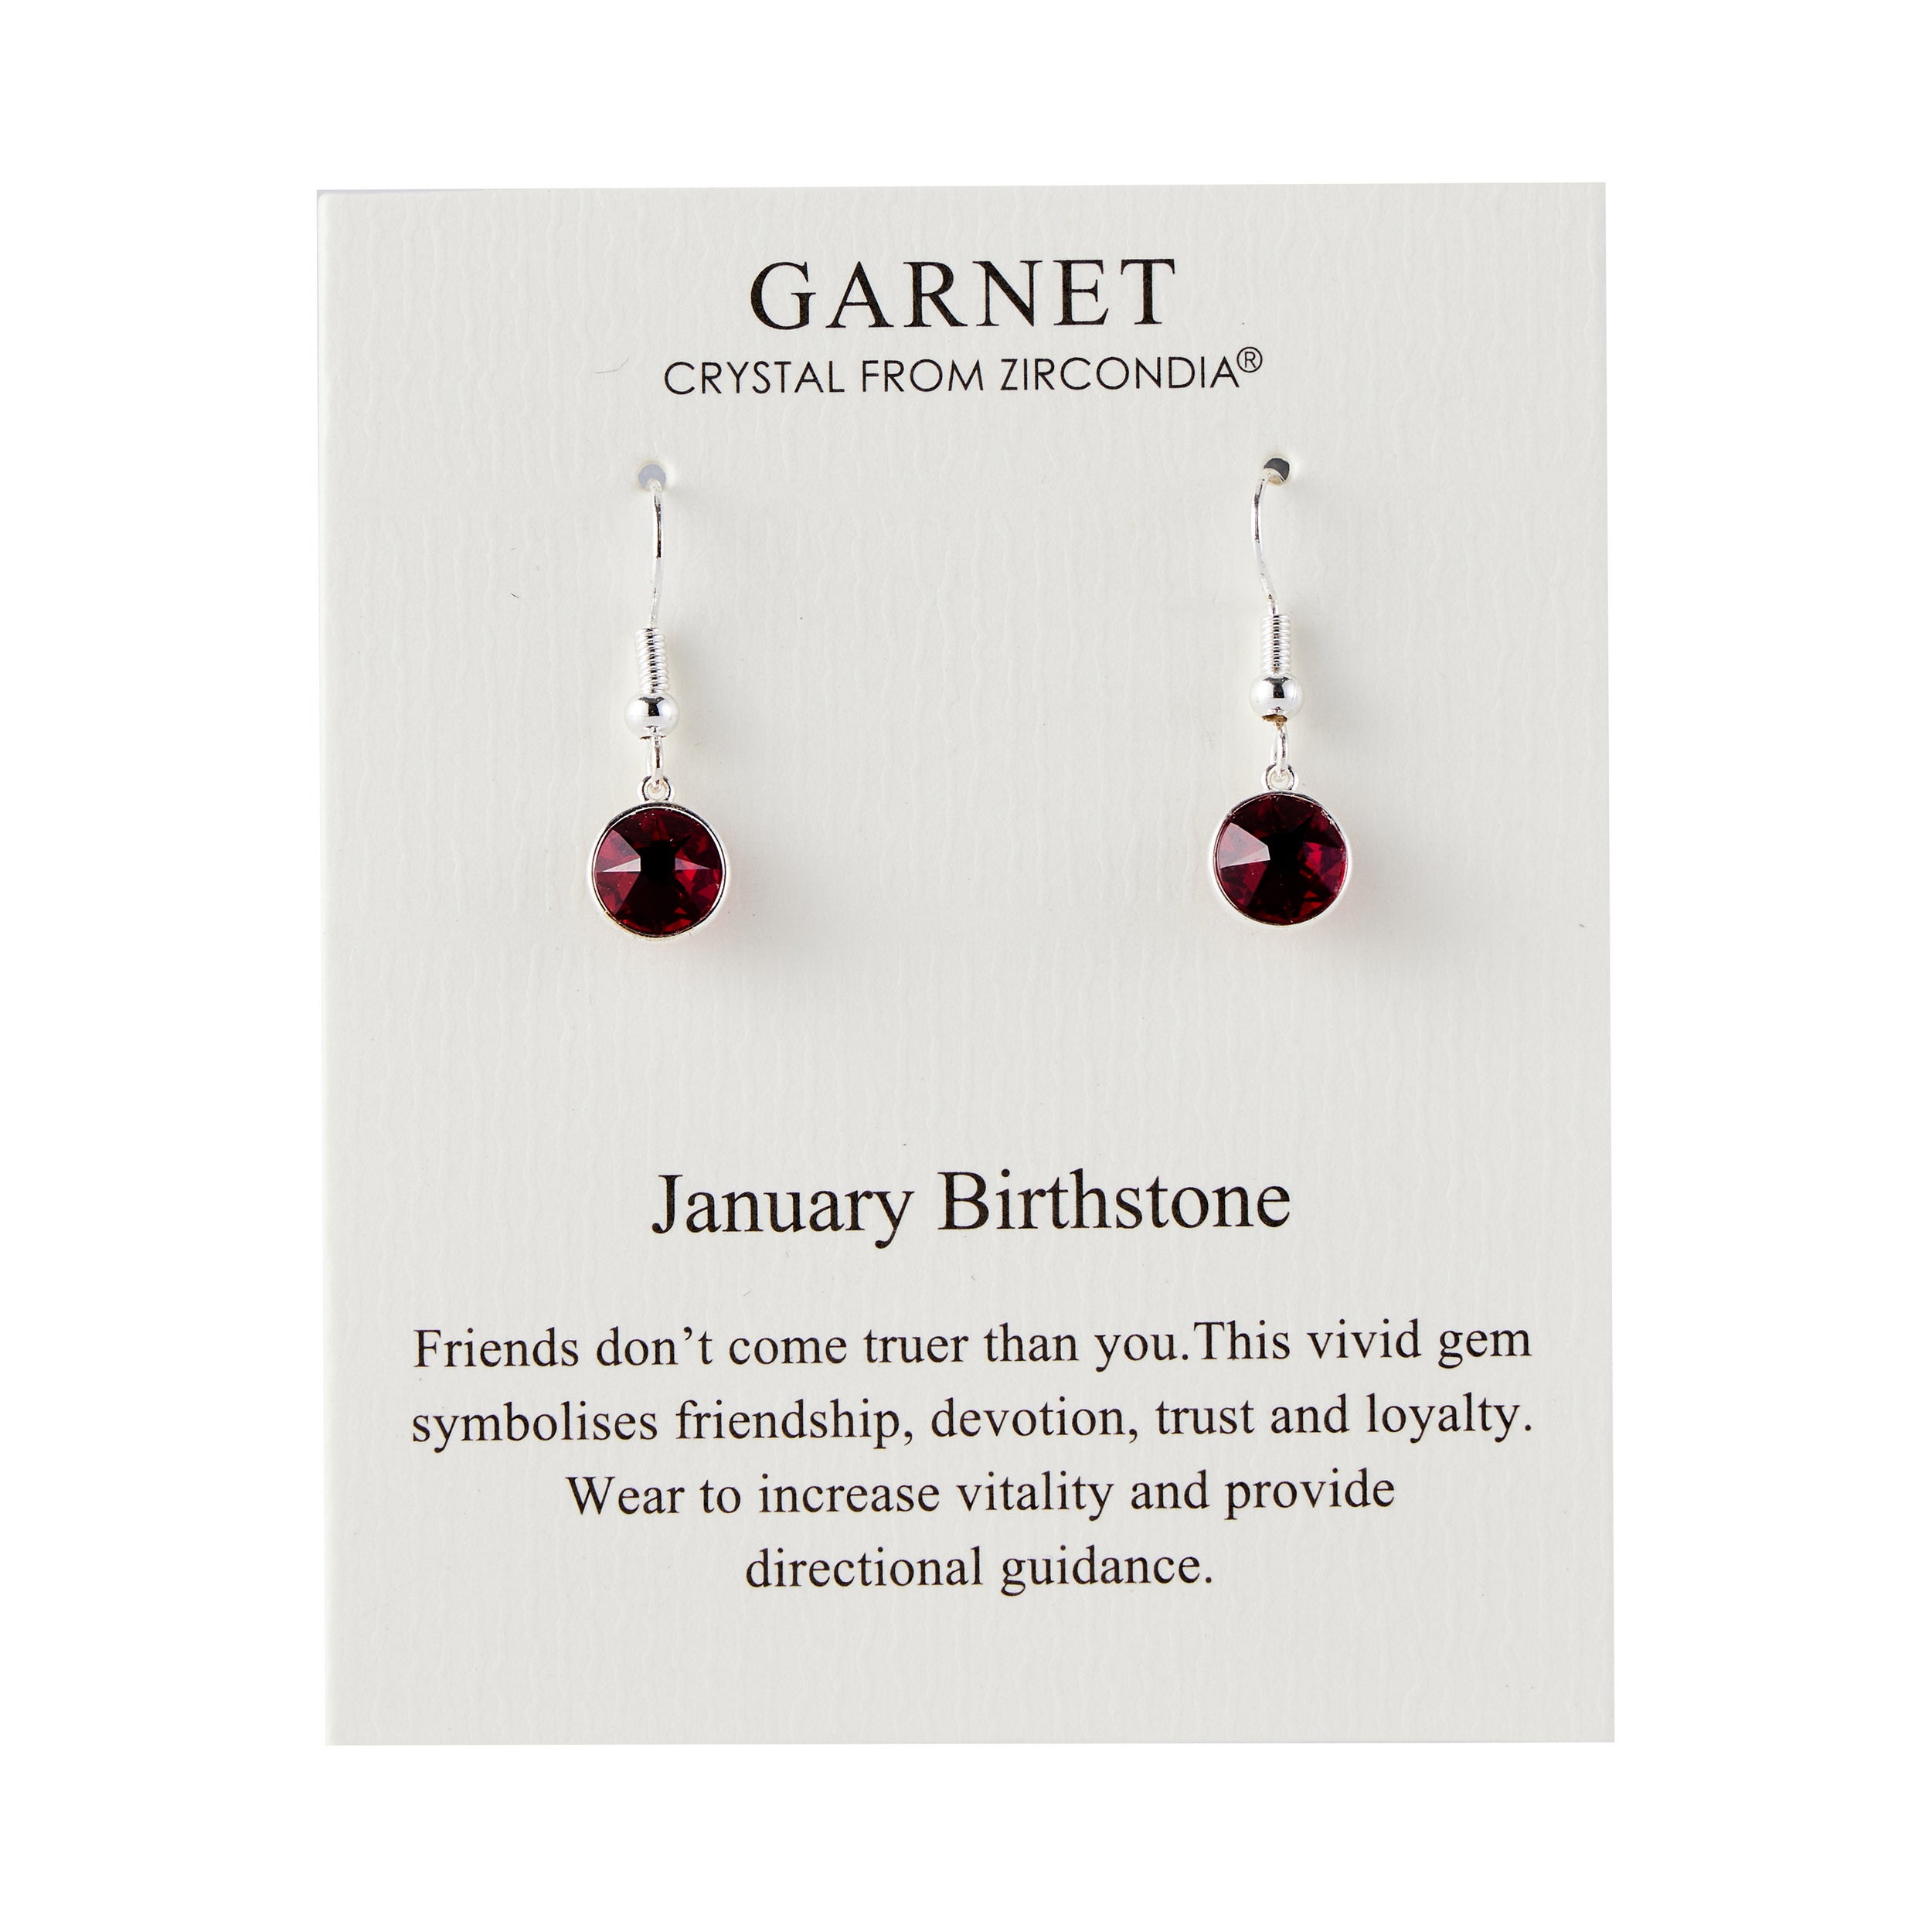 January Birthstone Drop Earrings Created with Garnet Zircondia® Crystals